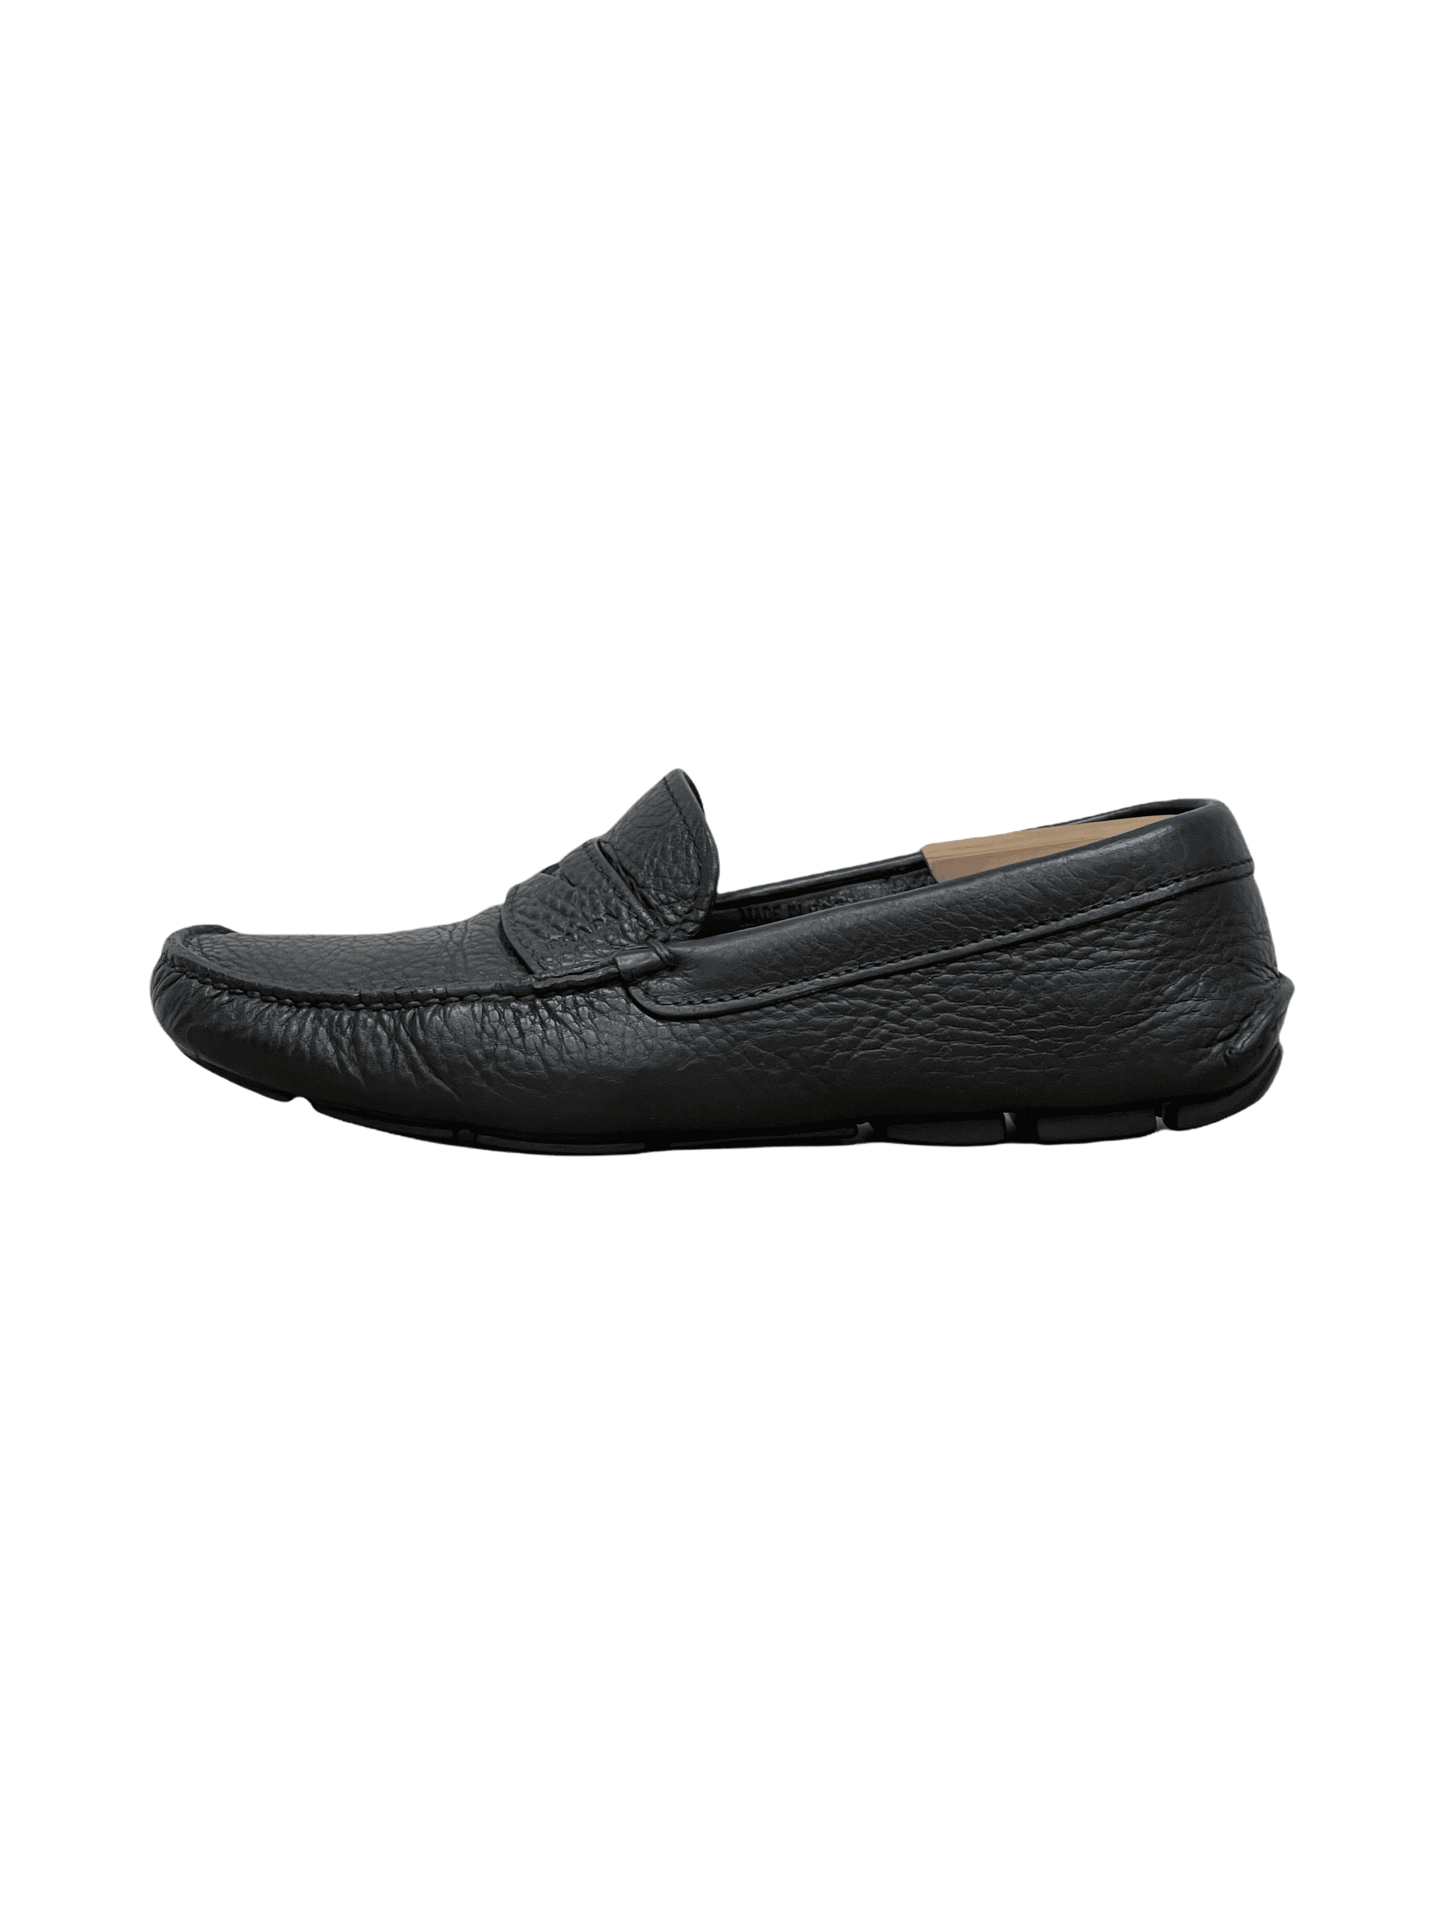 Prada Black Pebble Grain Driving Loafer Size 8 US